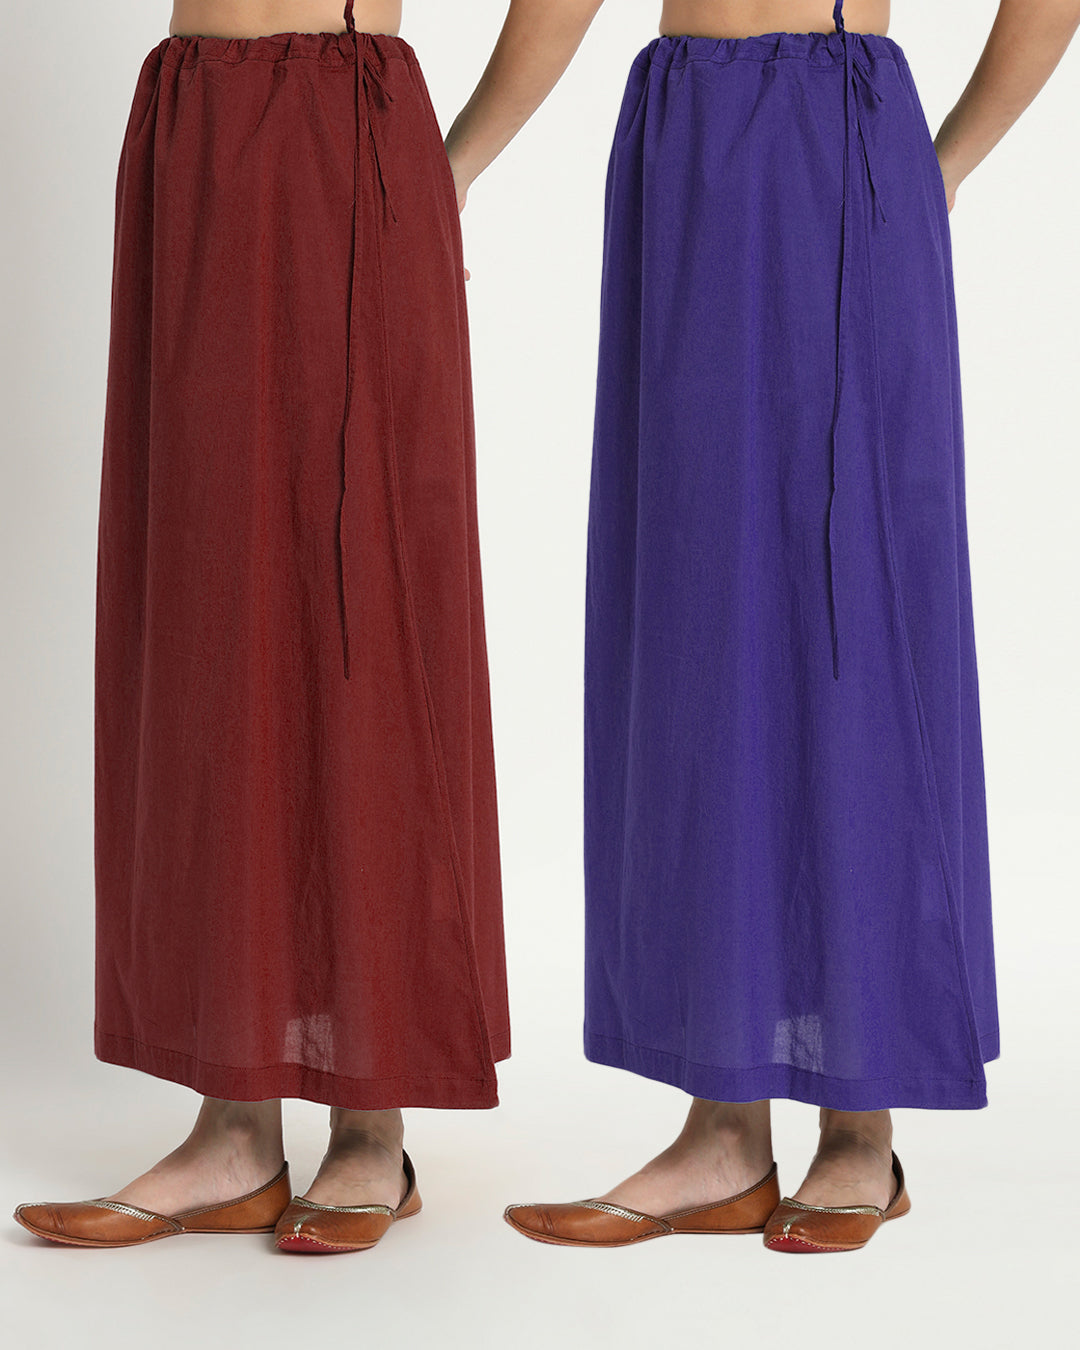 Combo: Russet Red & Aurora Purple Peekaboo Petticoat- Set of 2